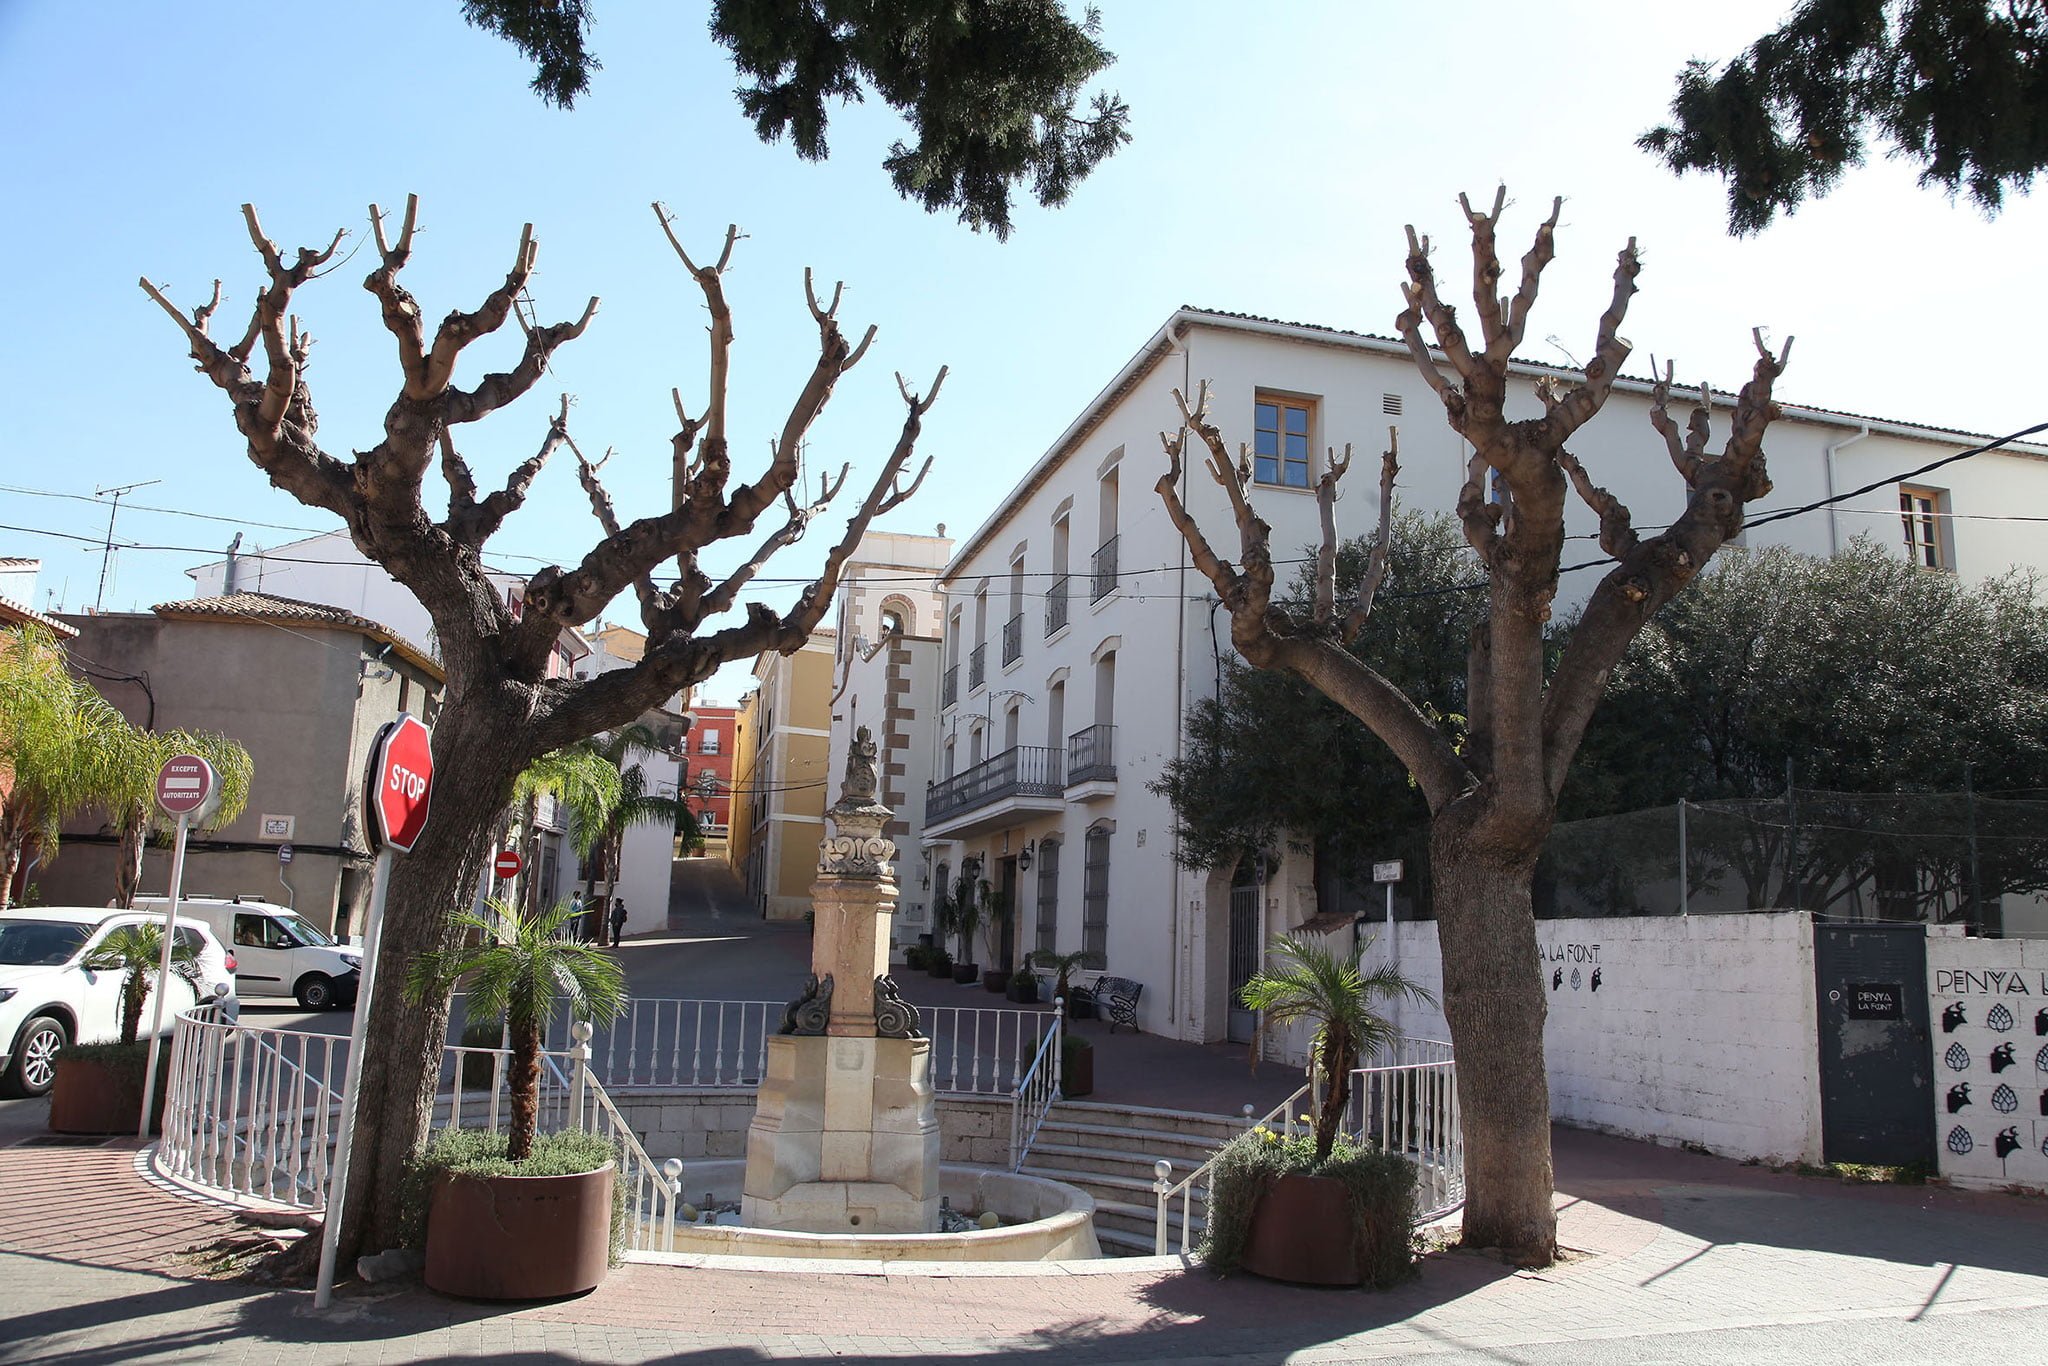 Plaza del Convento de Ondara